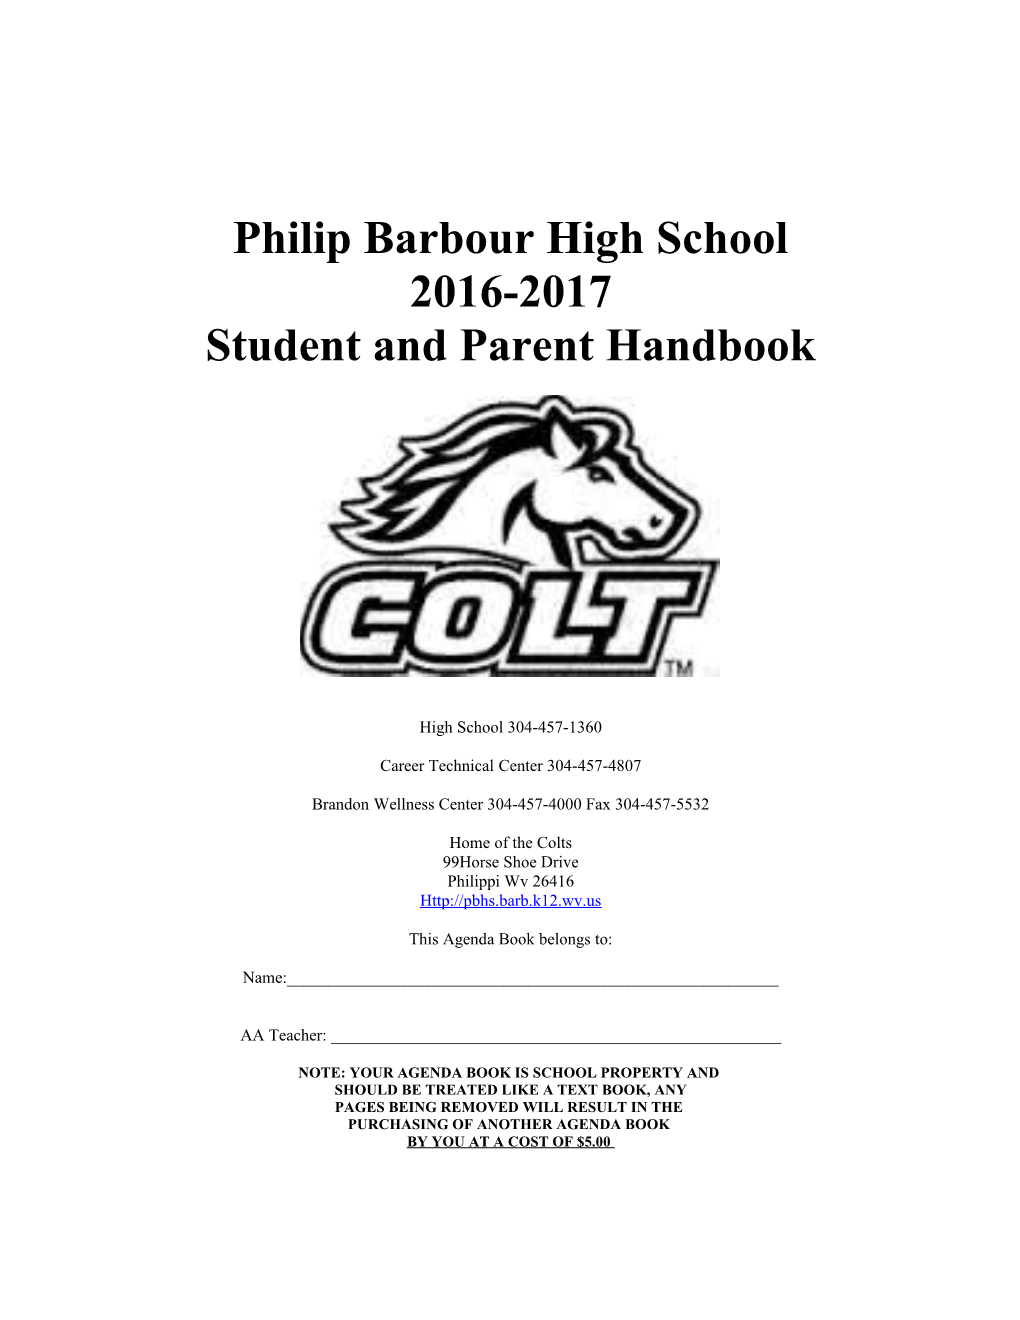 Philip Barbour High School Boys= Soccer 2000-01